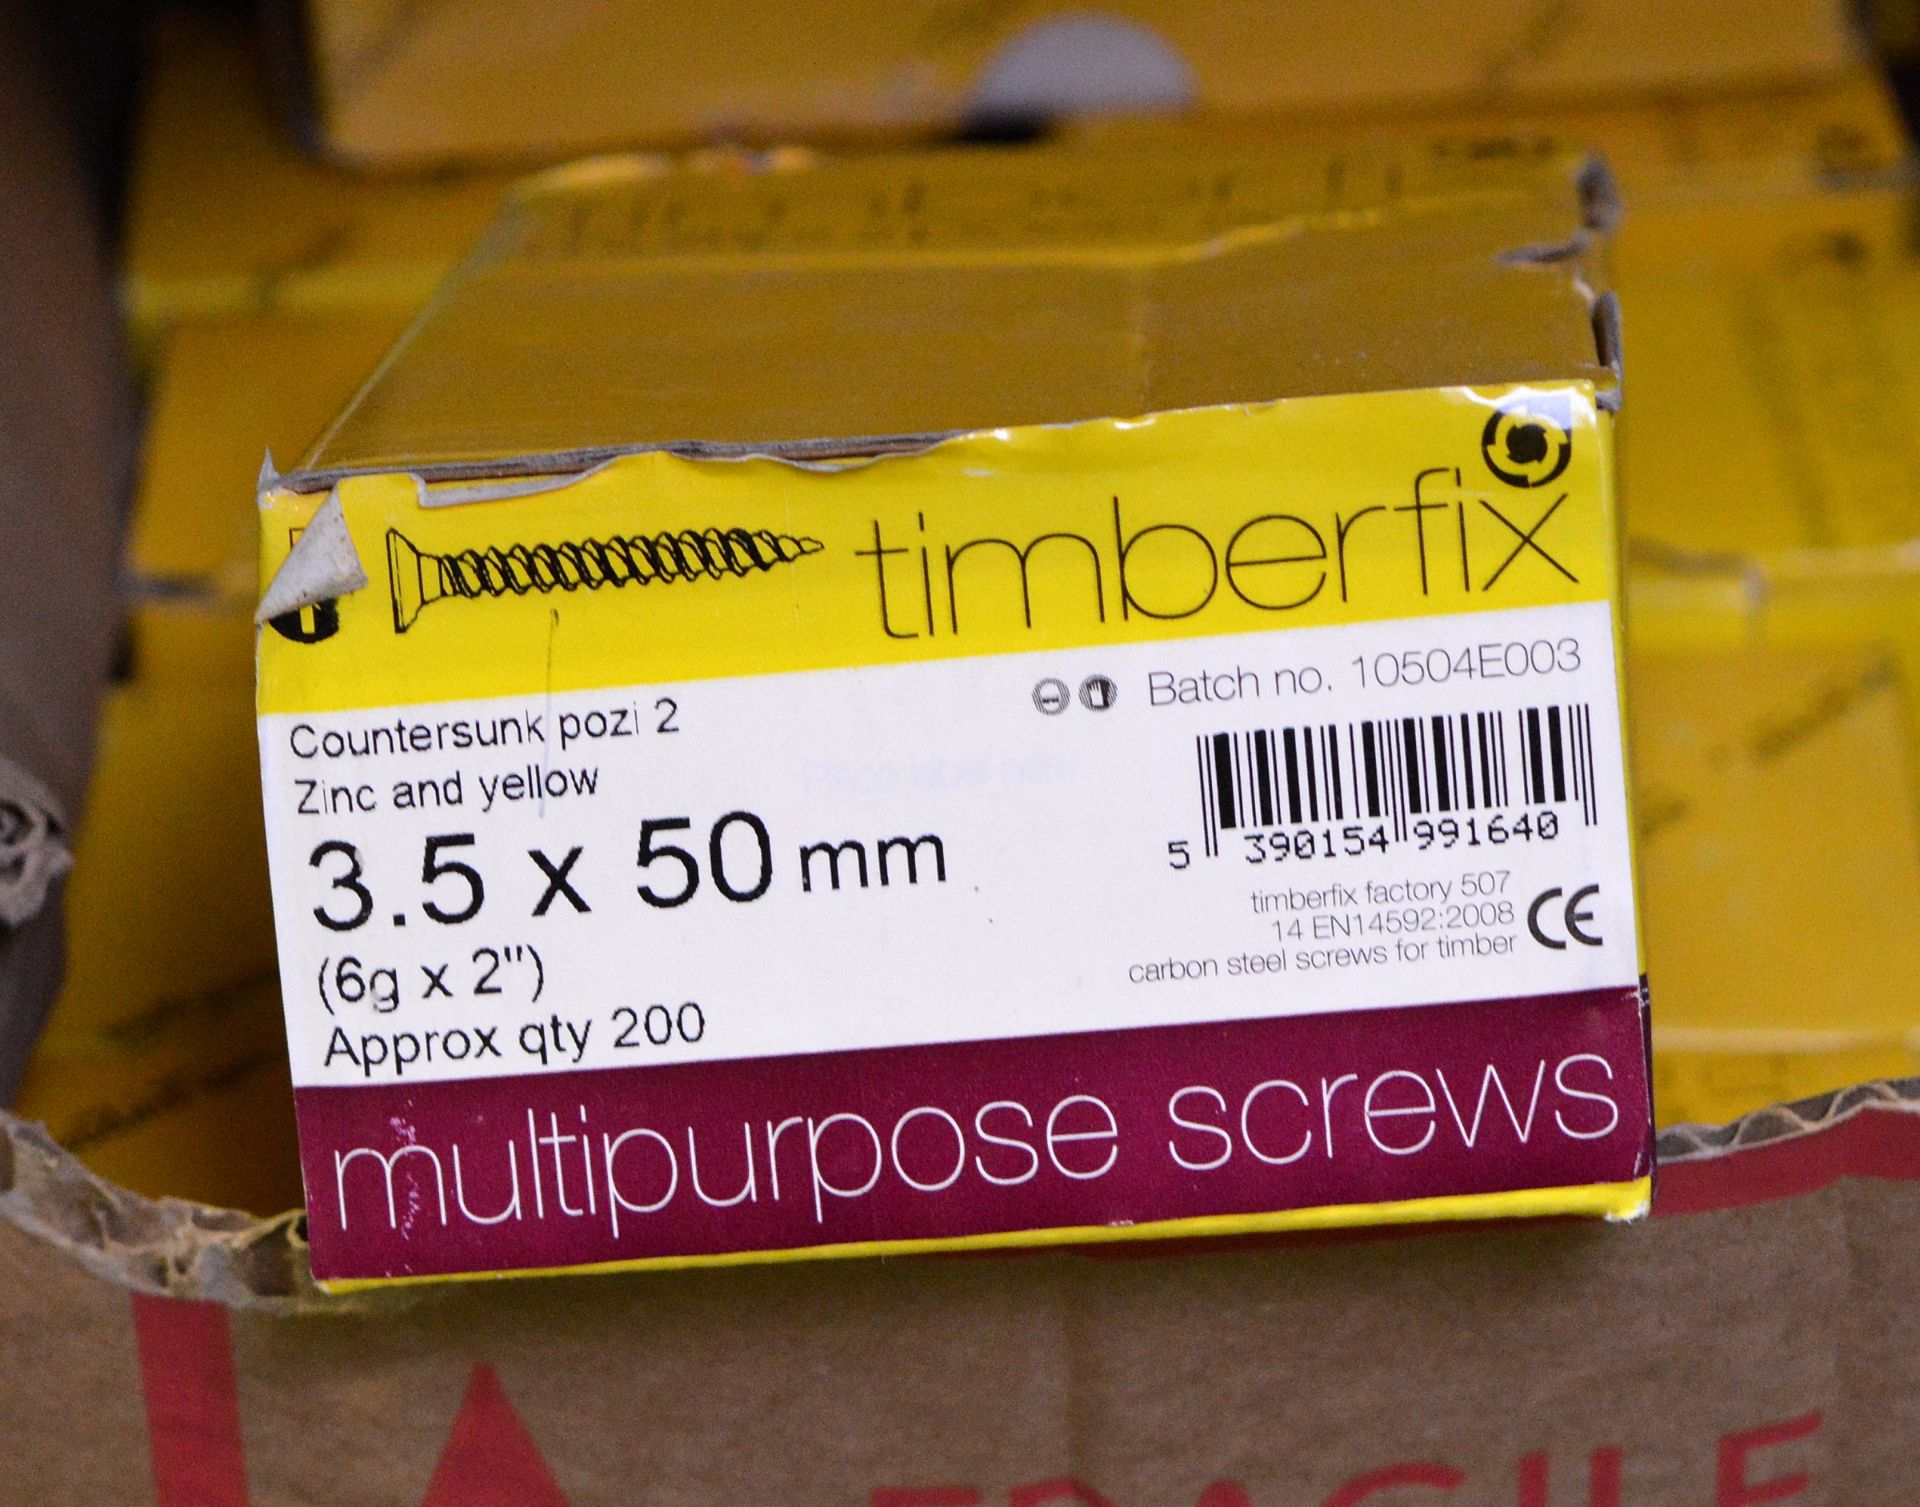 Timberflex multipurpose screws - 3.5x50mm - Image 2 of 2